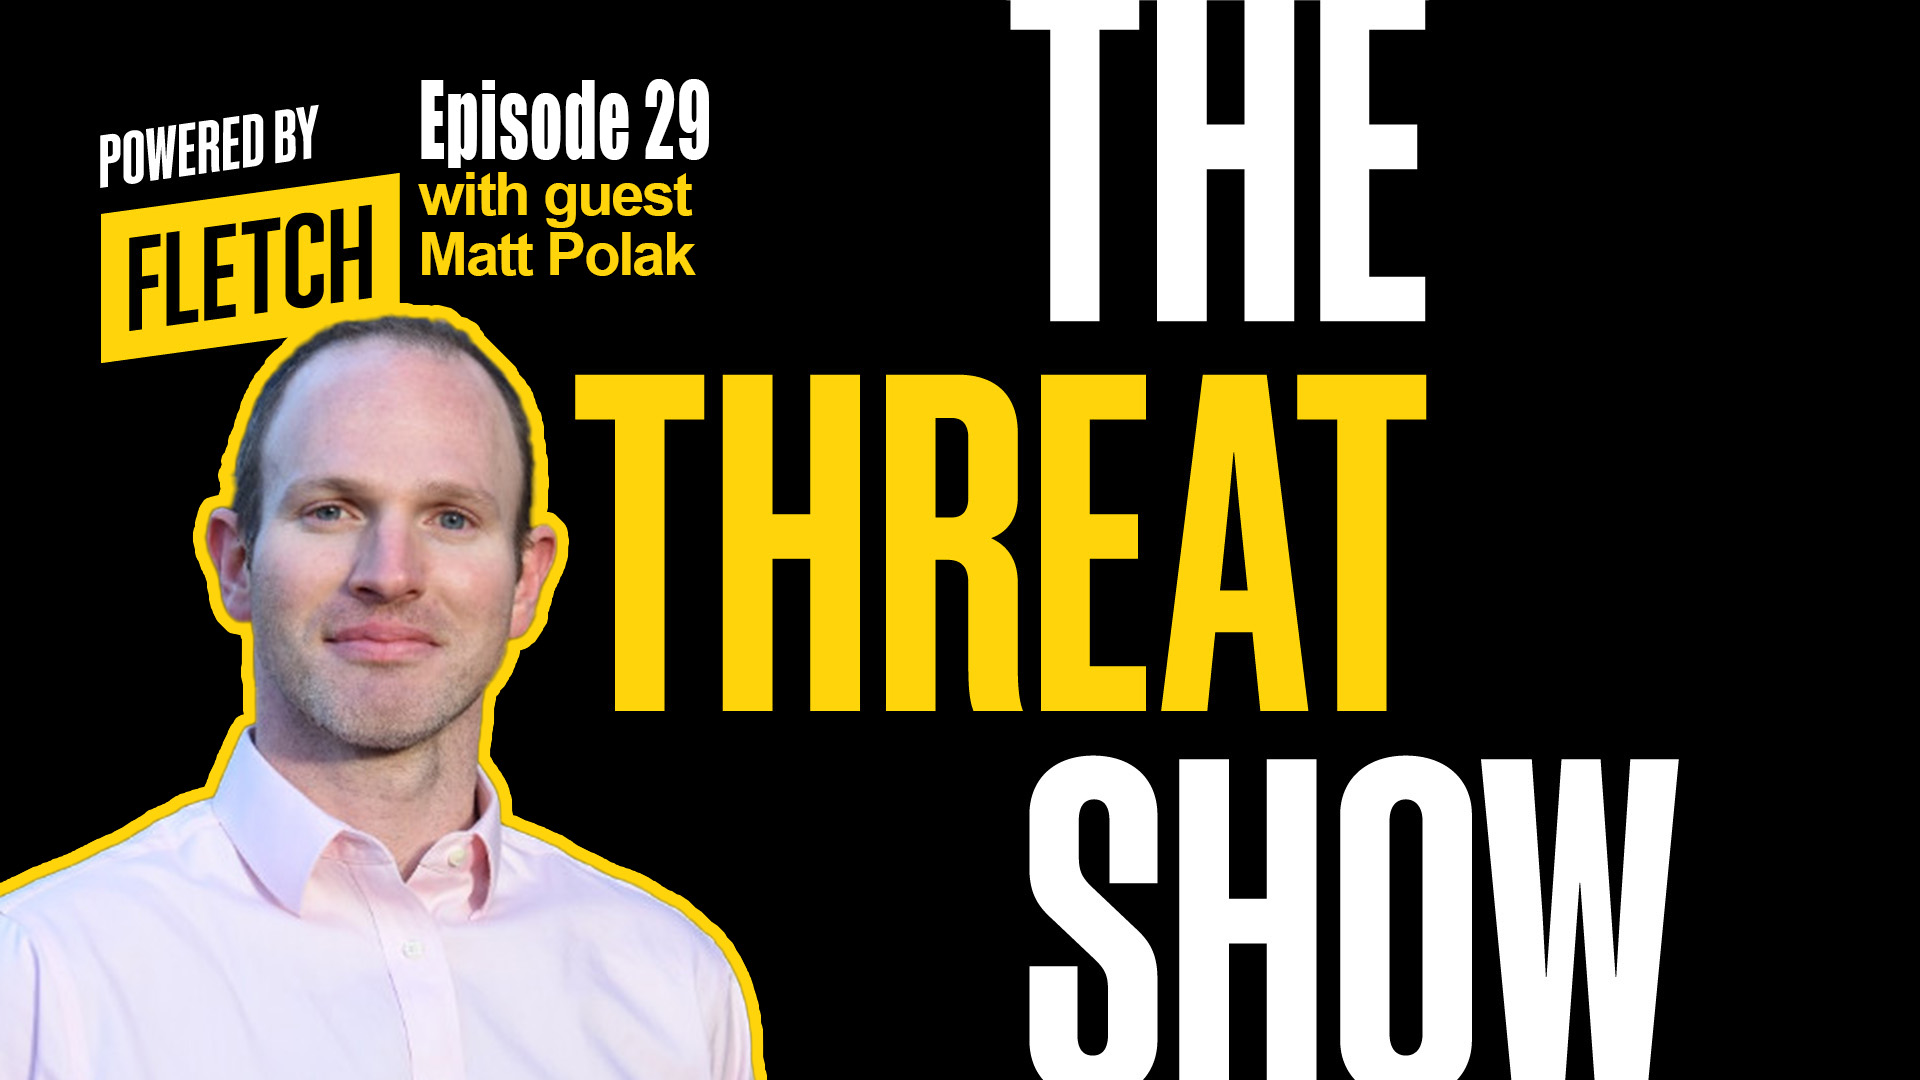 The Threat Show Ep. 29 w/ Matt Polak